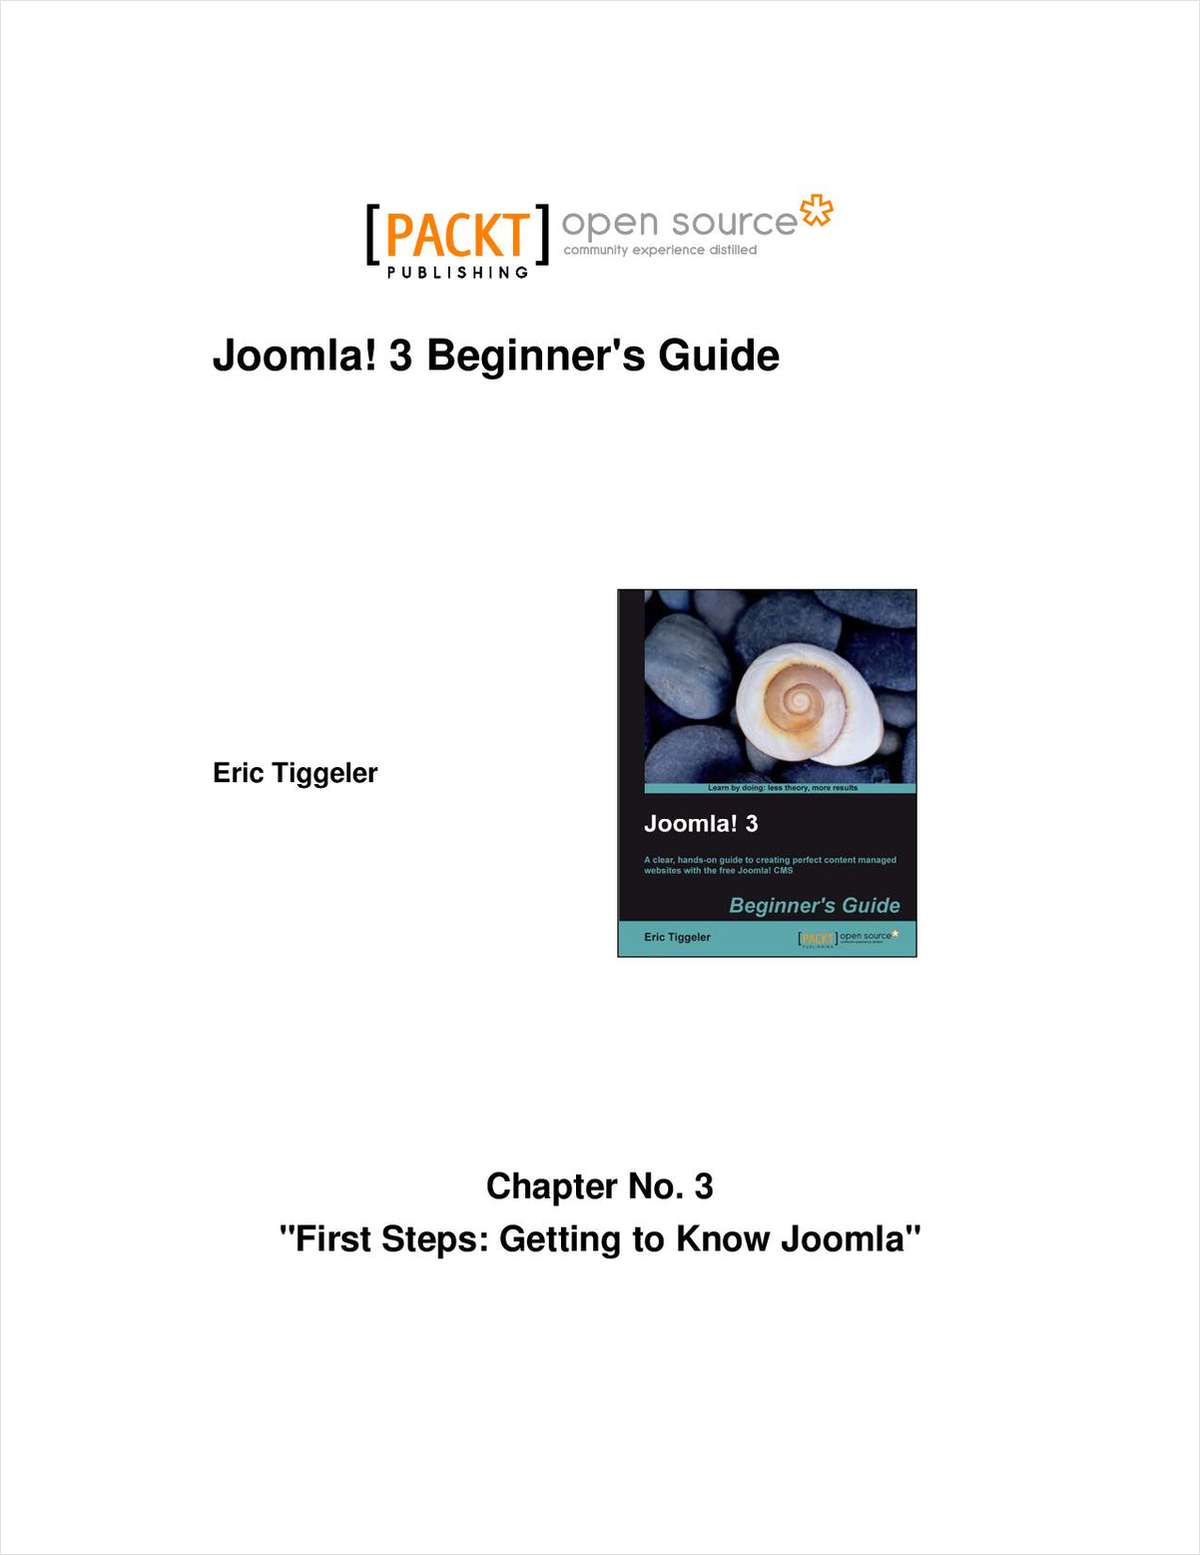 Joomla! 3 Beginner's Guide--Free 34 Page Excerpt